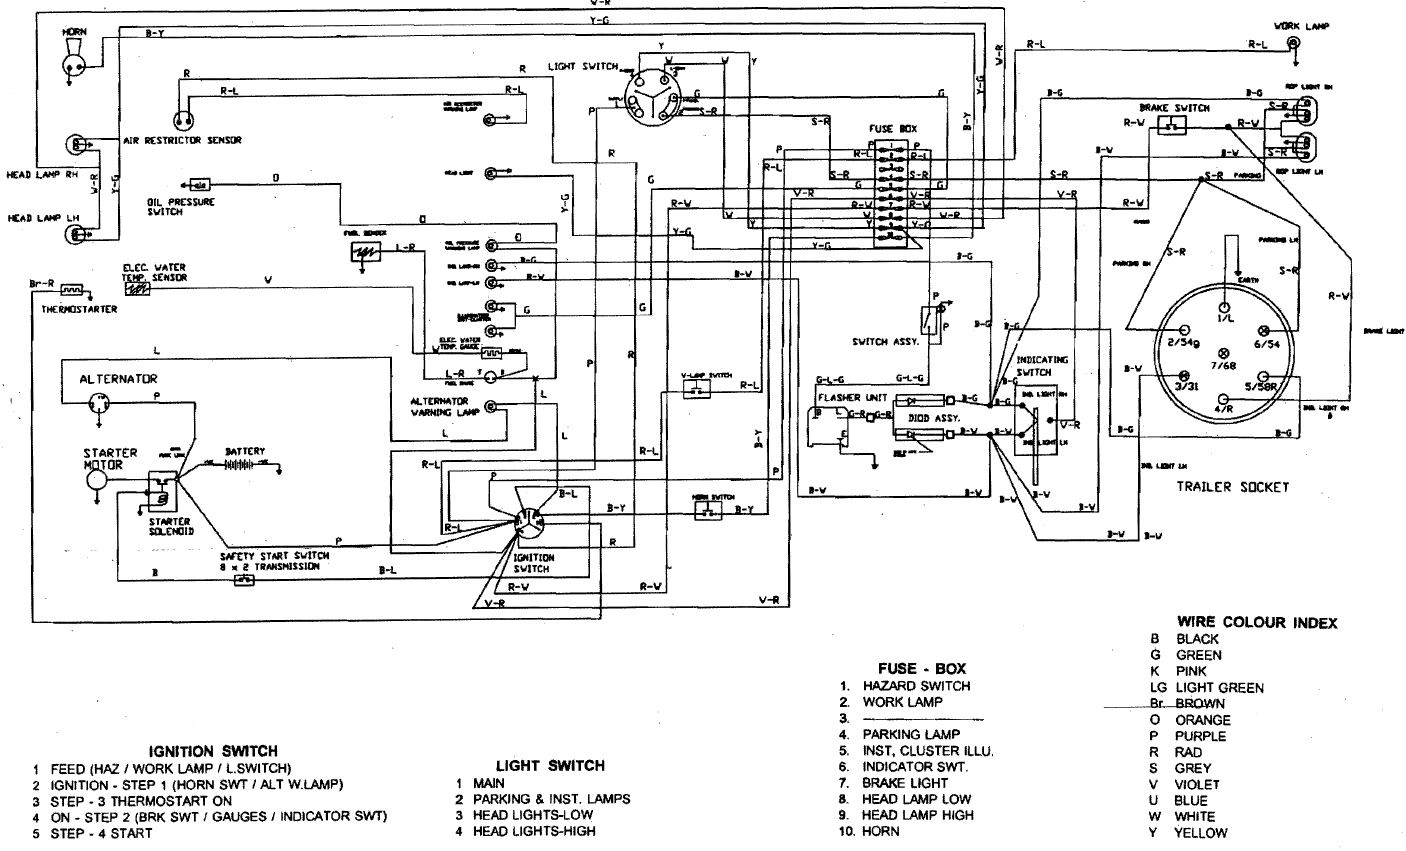 wiring diagram for john deere l120 lawn tractor